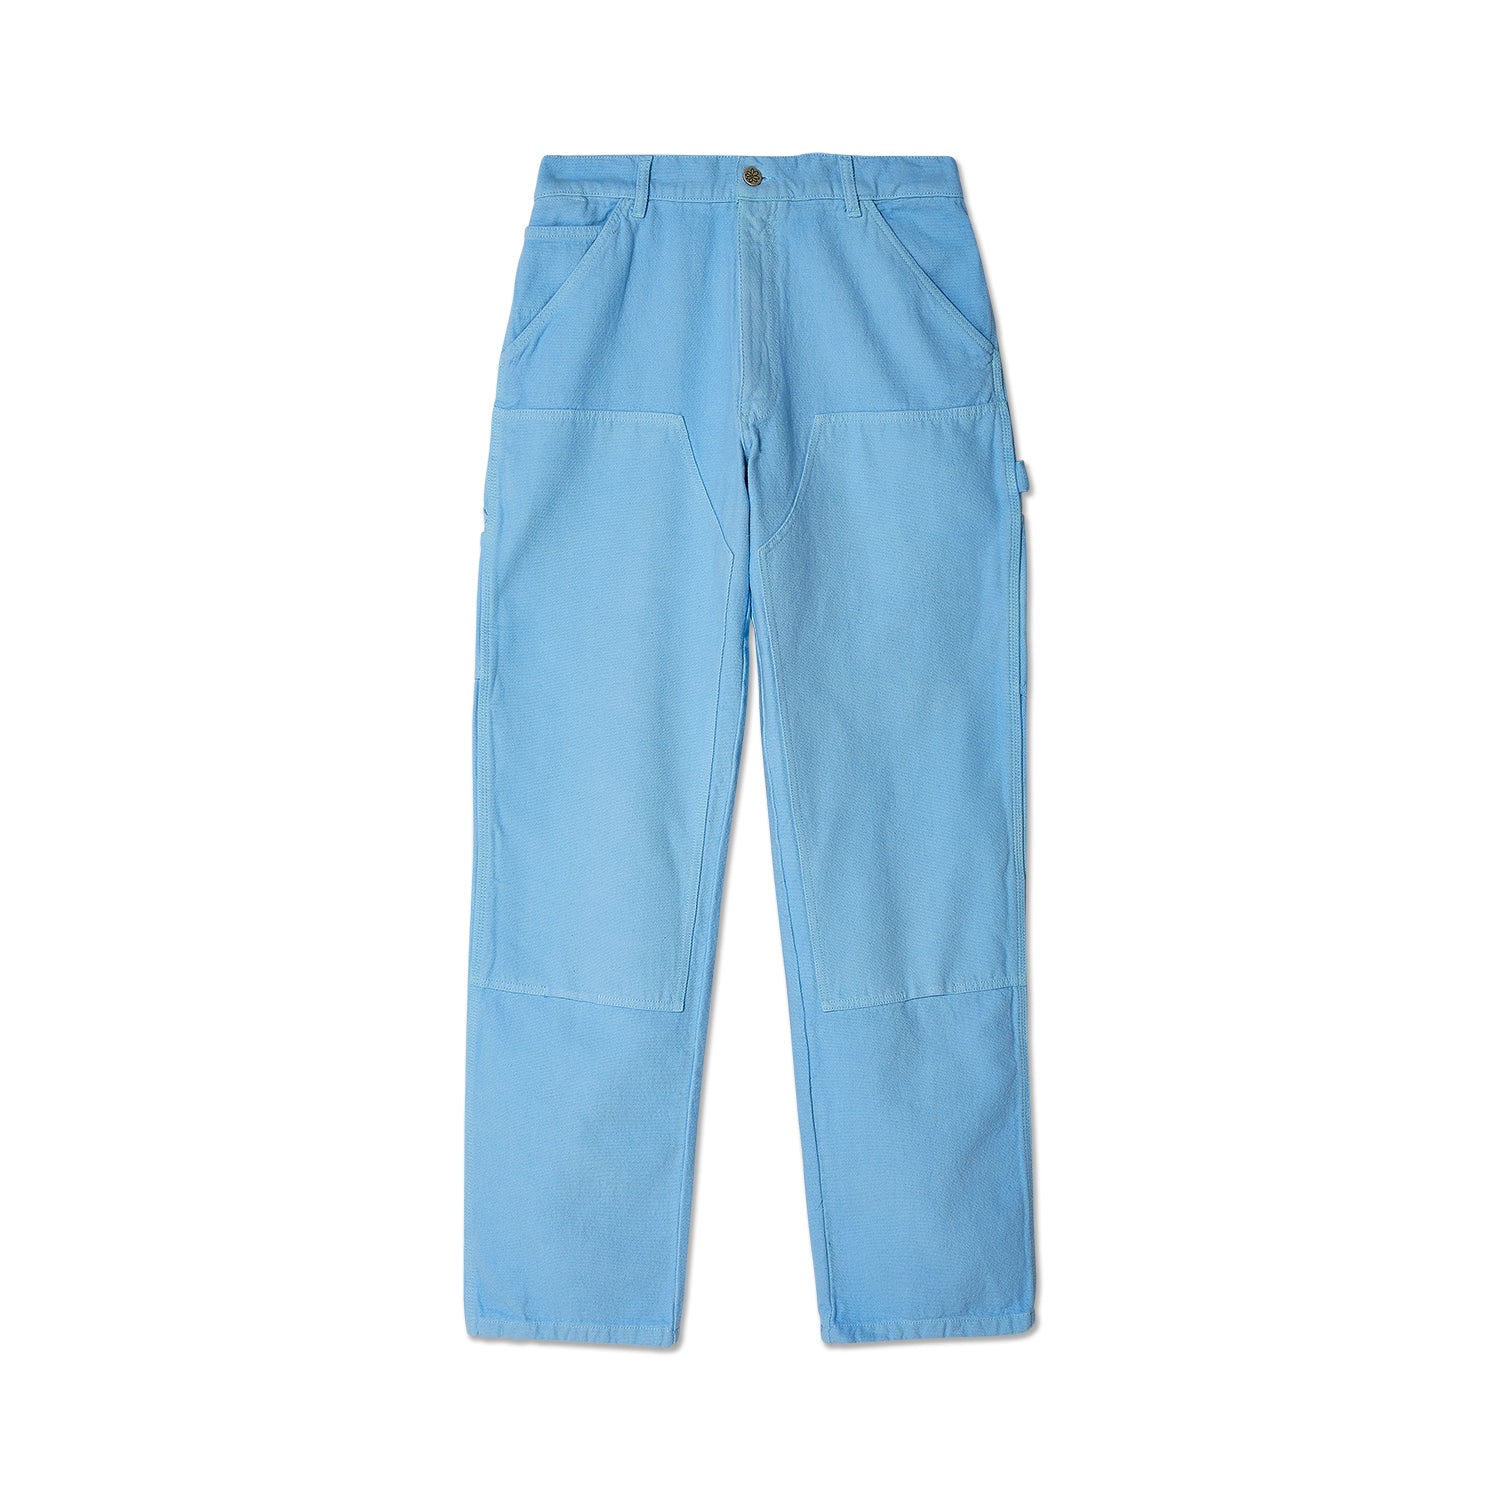 Sky High Farm Workwear Double Knee Pants Light Blue Front